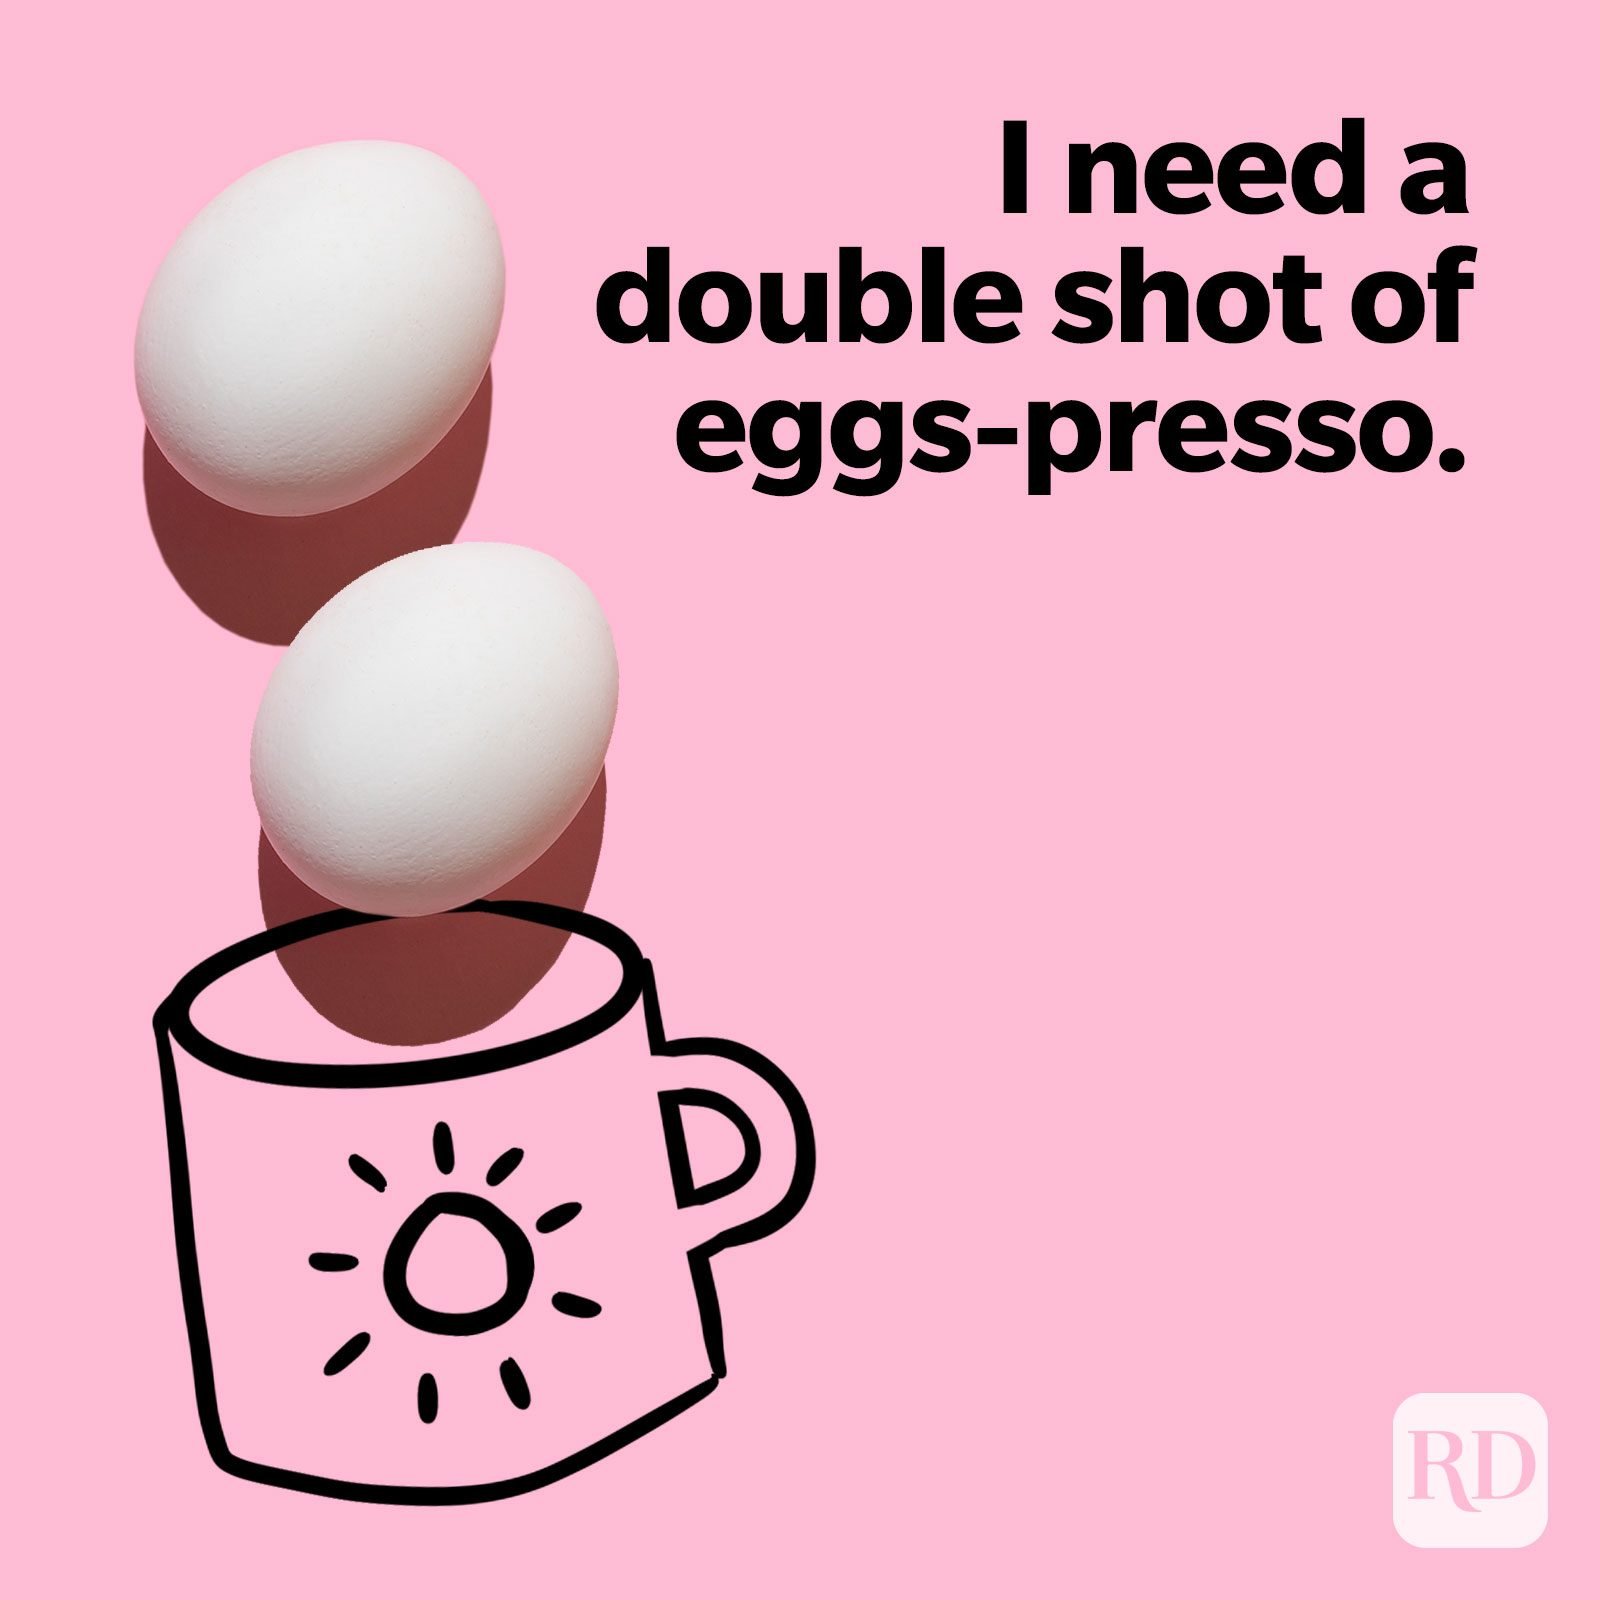 I need a double shot of eggs-presso.